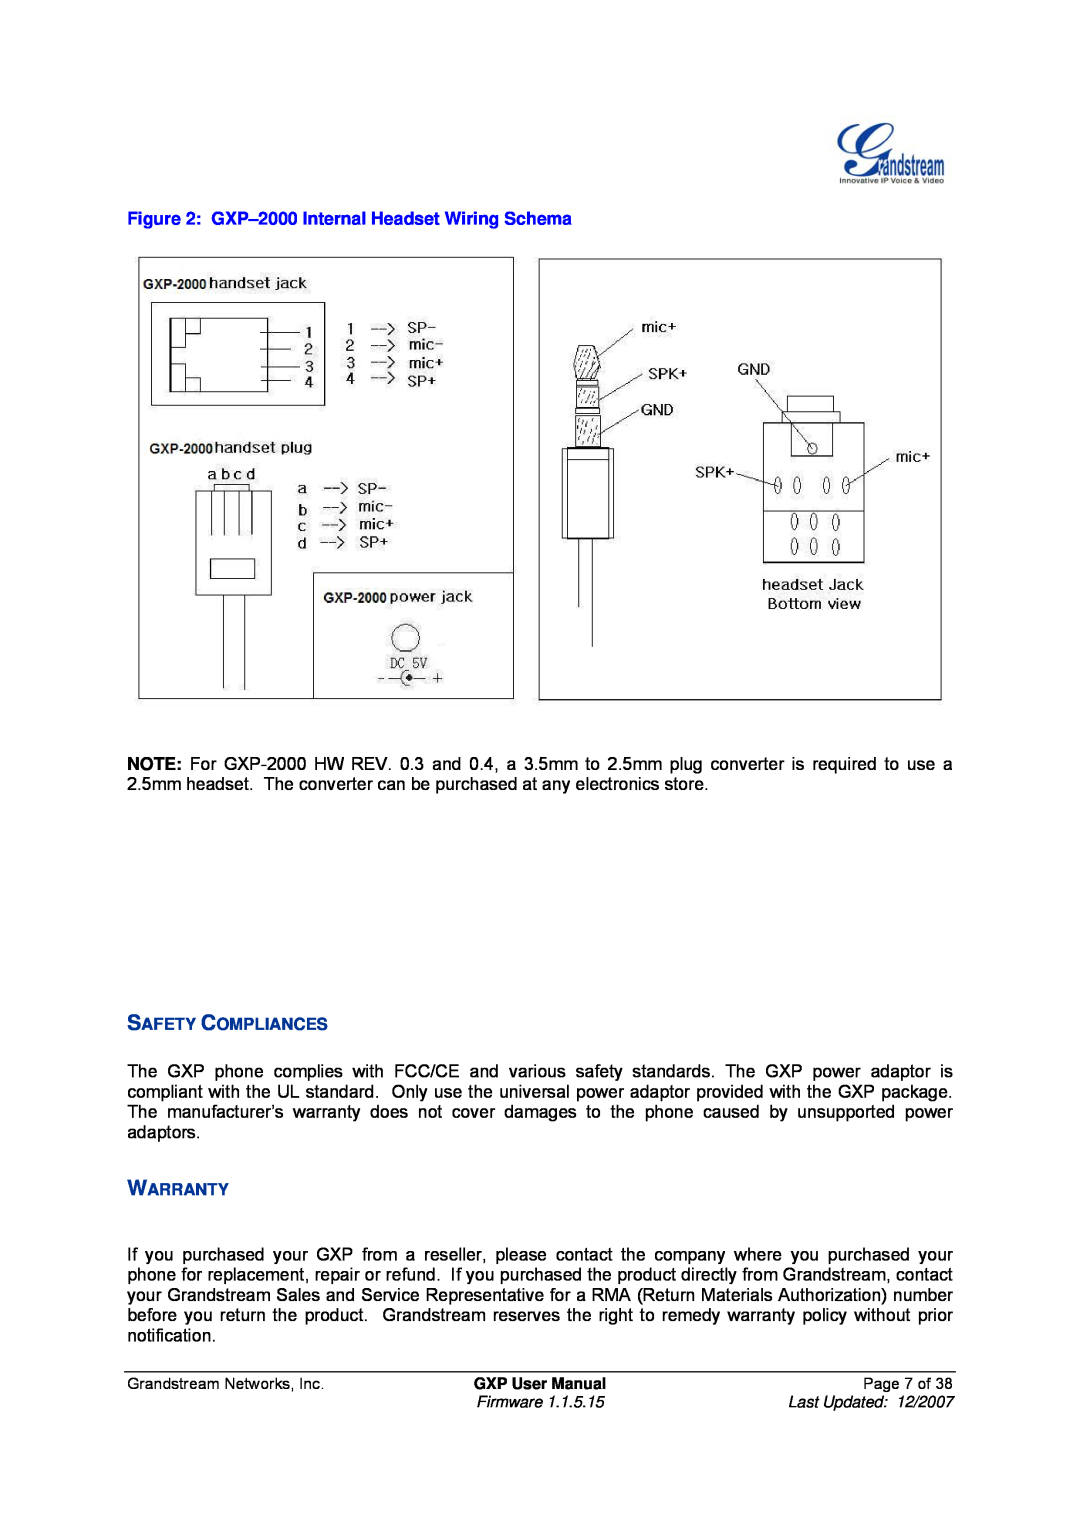 Grandstream Networks GXP-1200, GXP-2010 manual GXP-2000 Internal Headset Wiring Schema, Safety Compliances, Warranty 